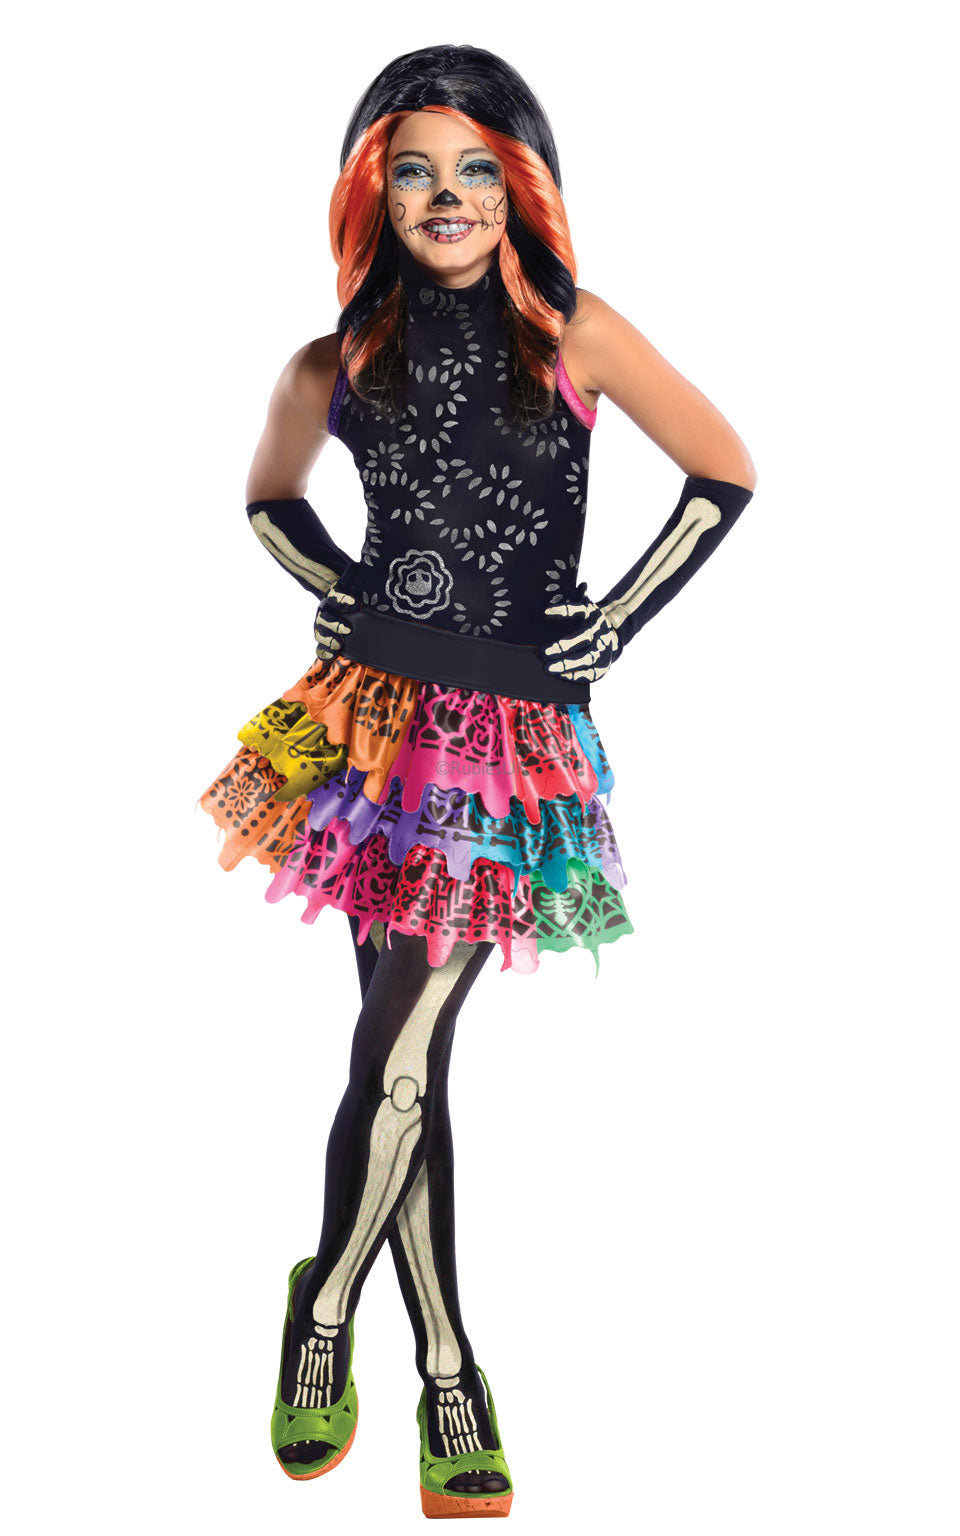 Skelita Calvaeras Monster High Costume